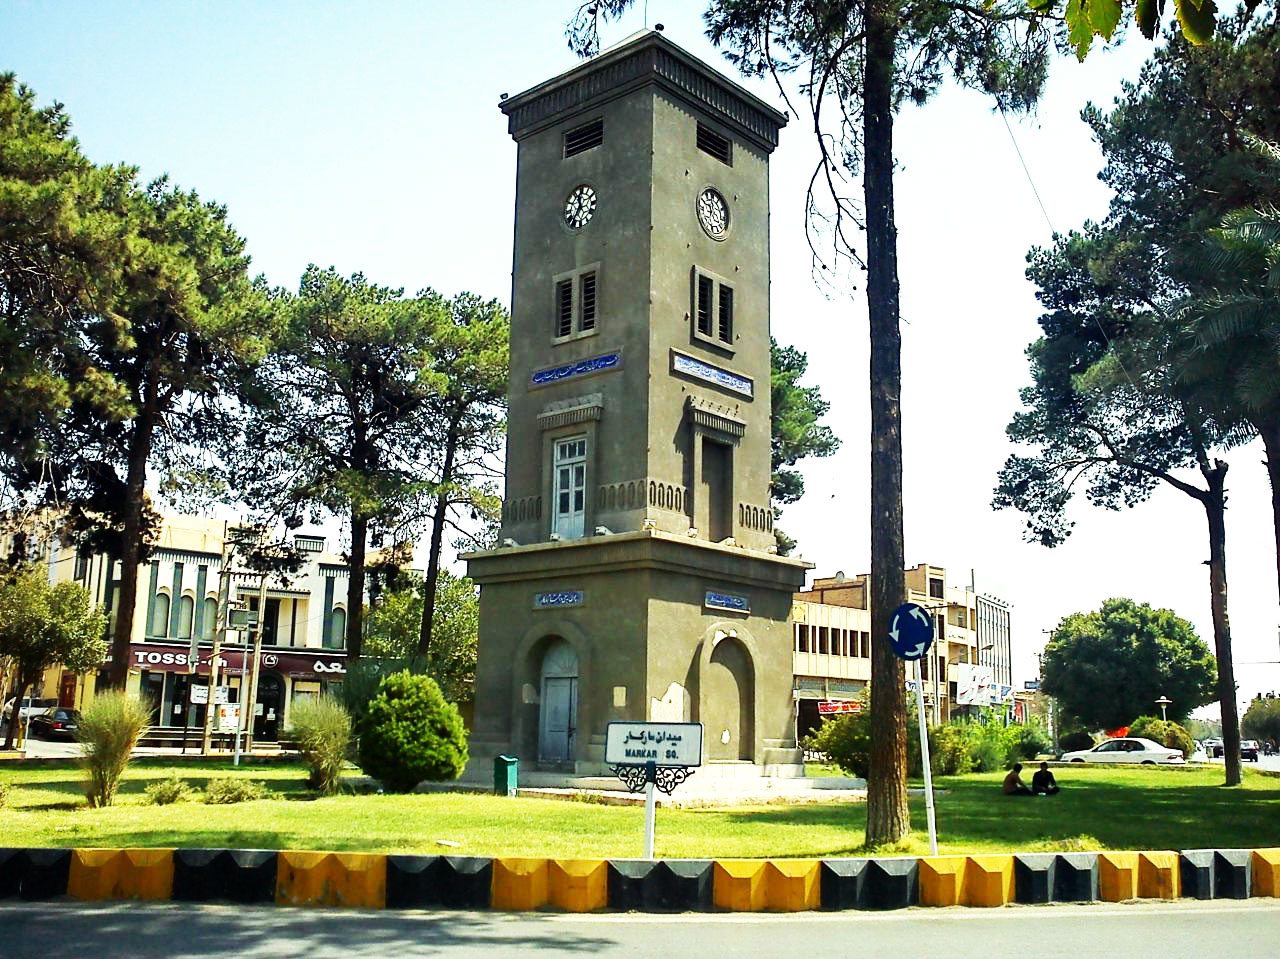 Markar clock tower